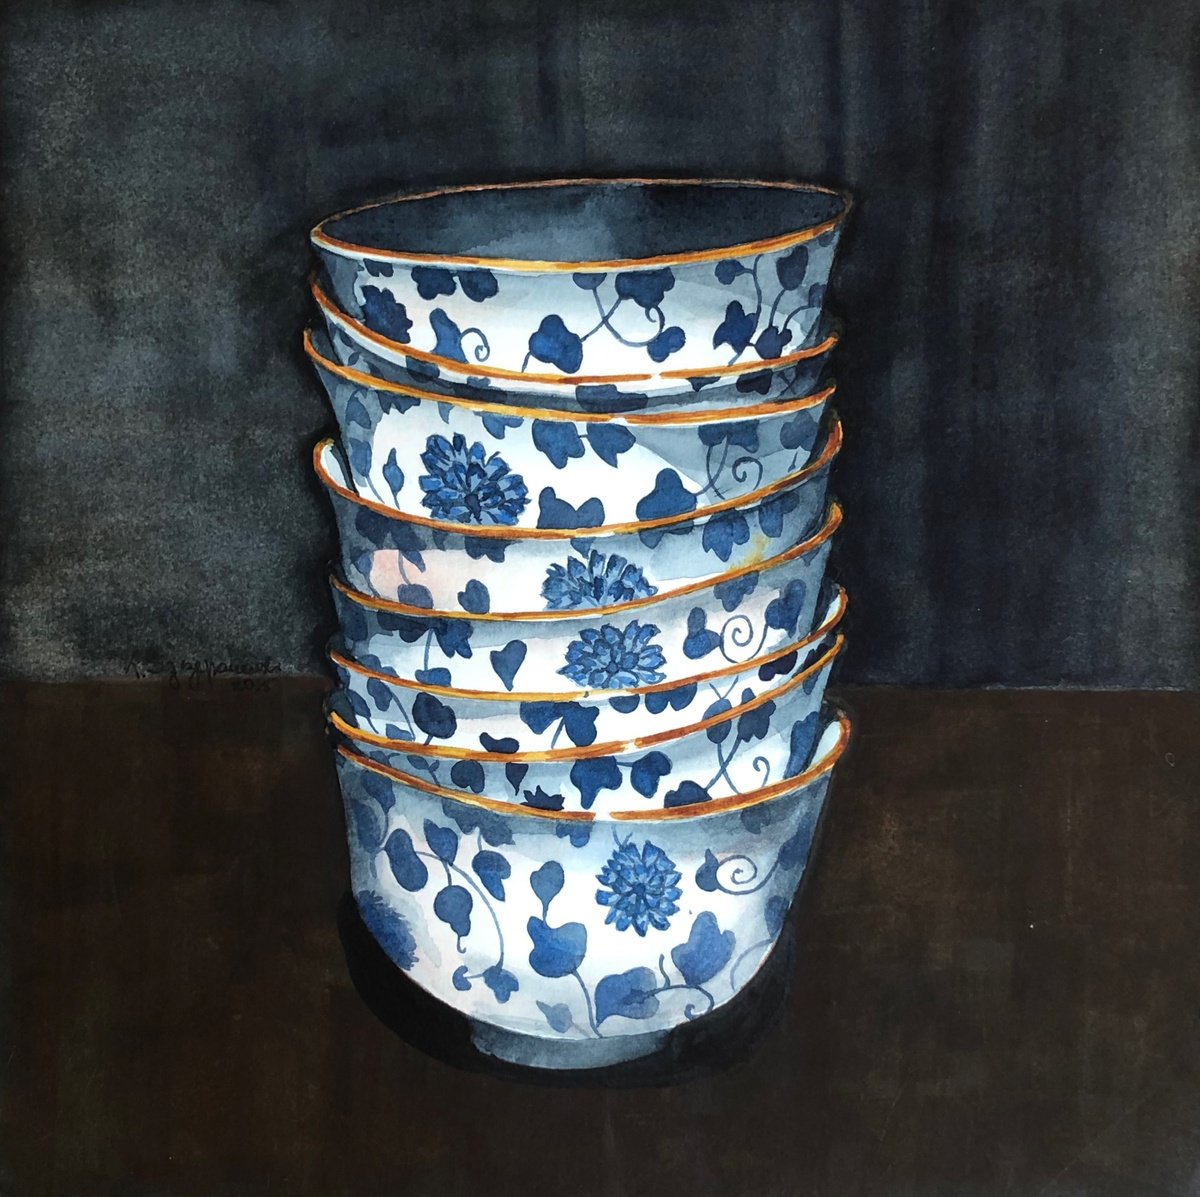 Floral patterned bowls by Krystyna Szczepanowski